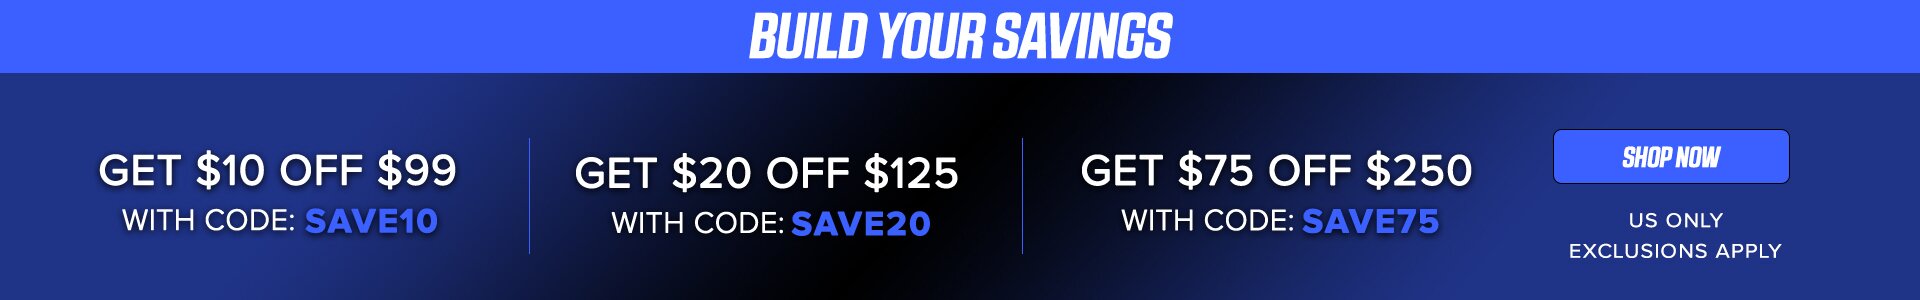 Build Your Savings